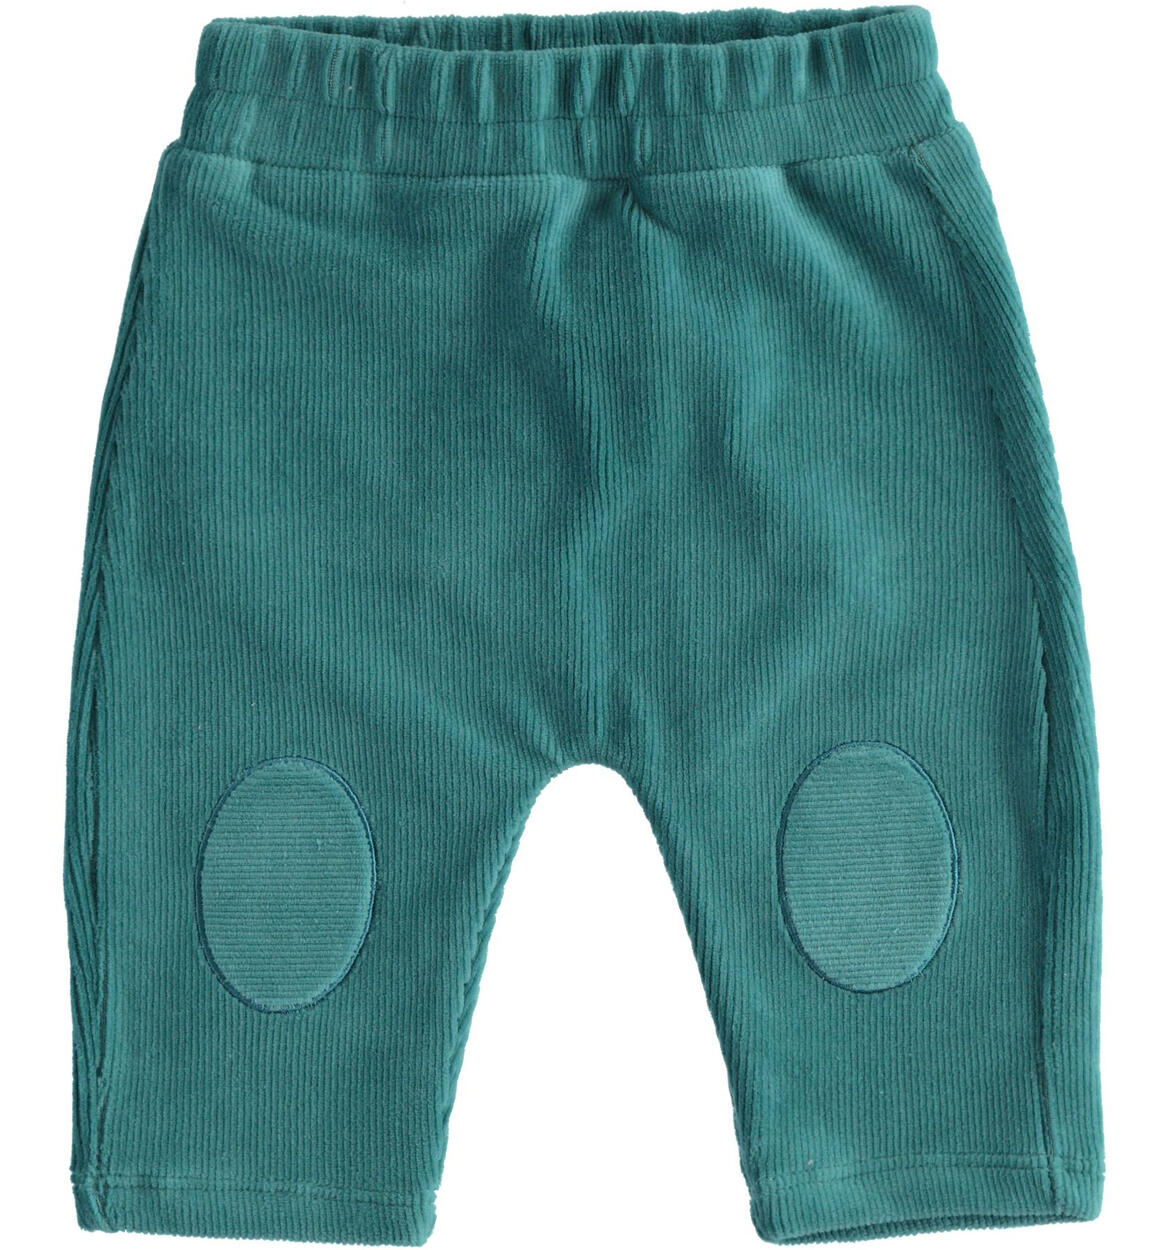 Pantaloni neonato finte toppe BLU Minibanda